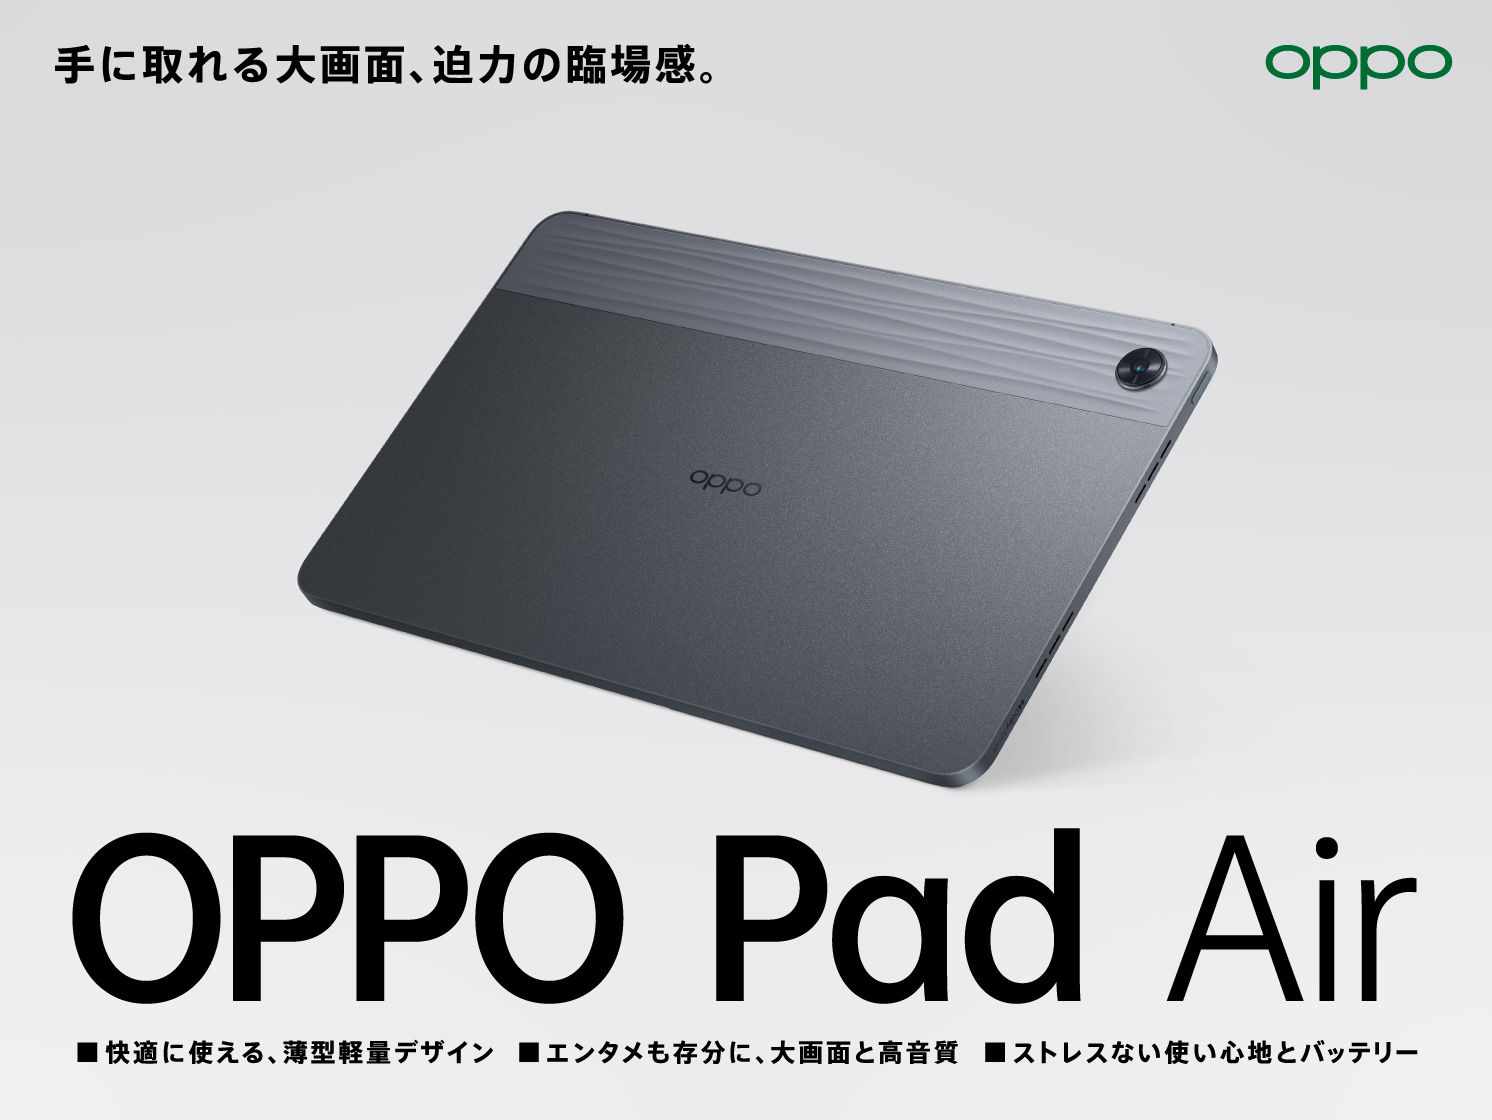 OPPOから“初”のタブレットデバイスが登場 「OPPO Pad Air」、9月30日 ...